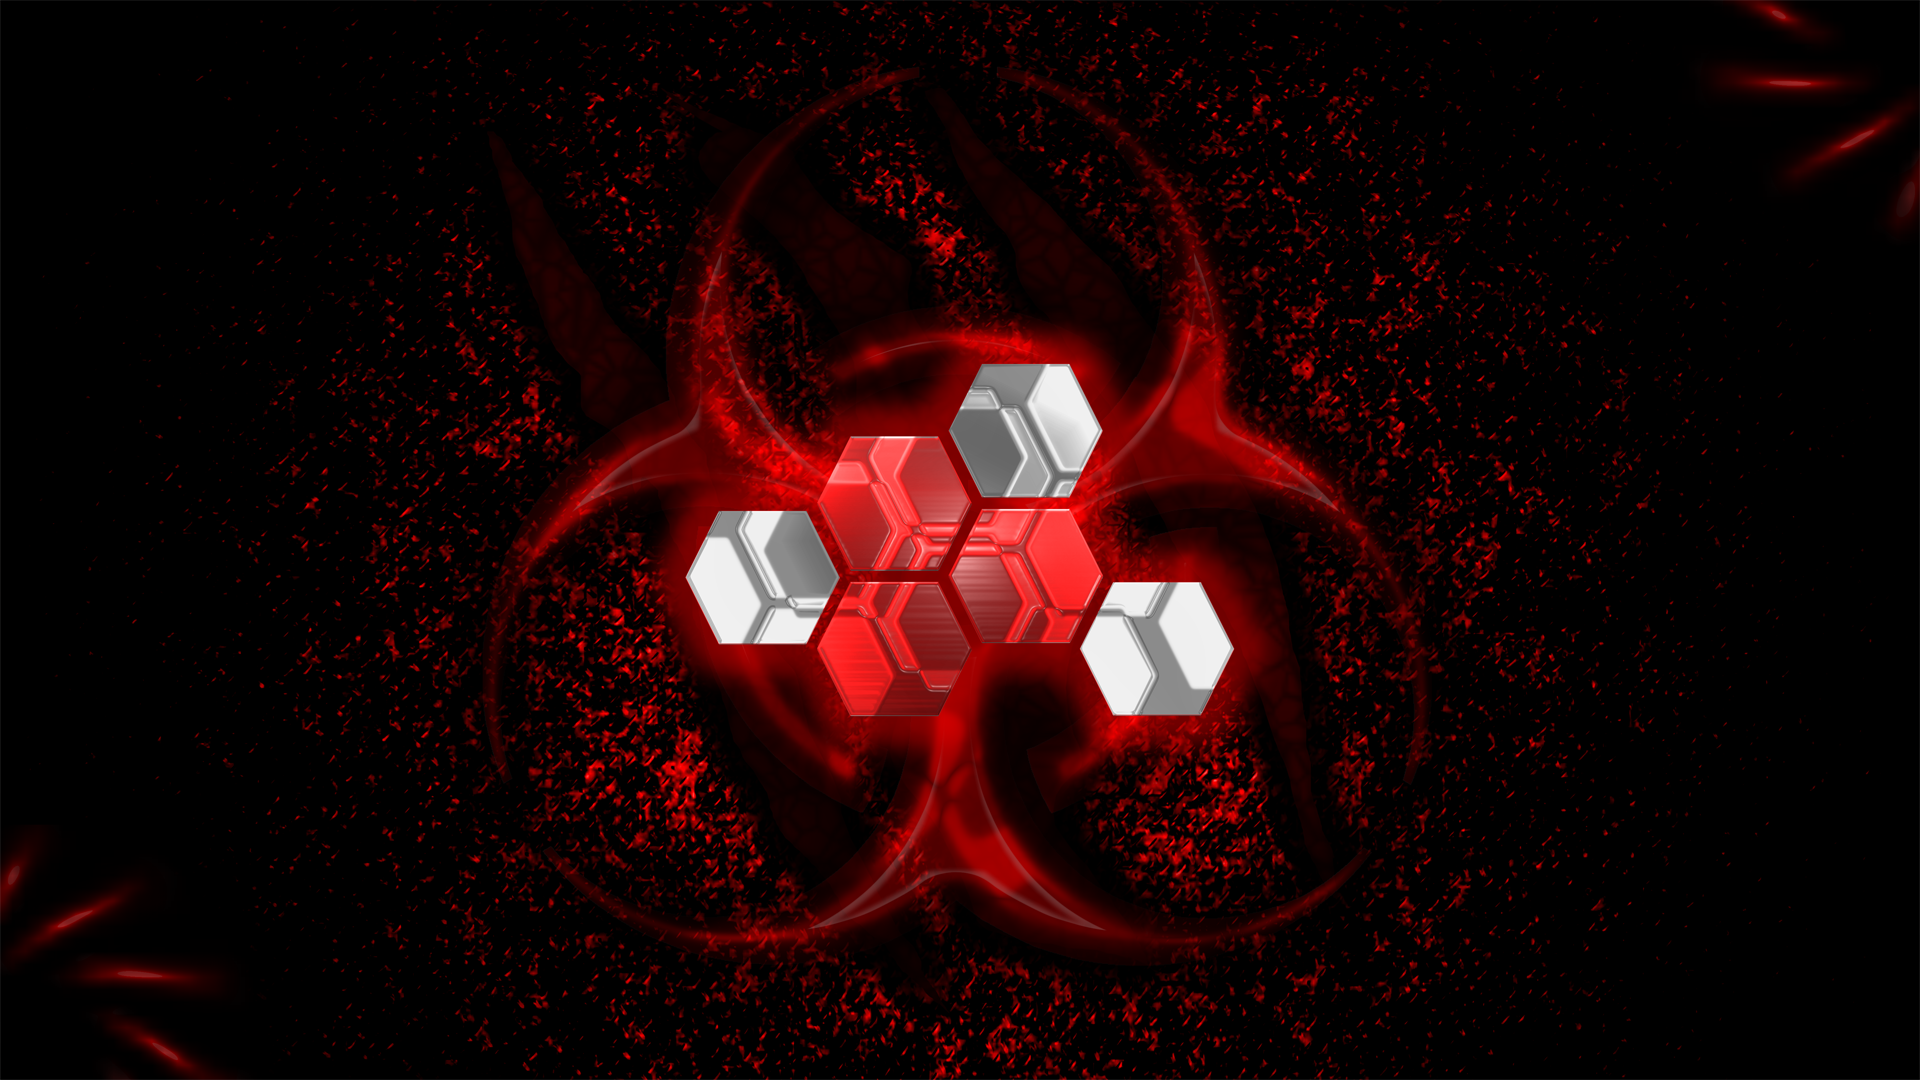 Comikz Ink Desktop Wallpaper (Red) by ComikzInk on DeviantArt